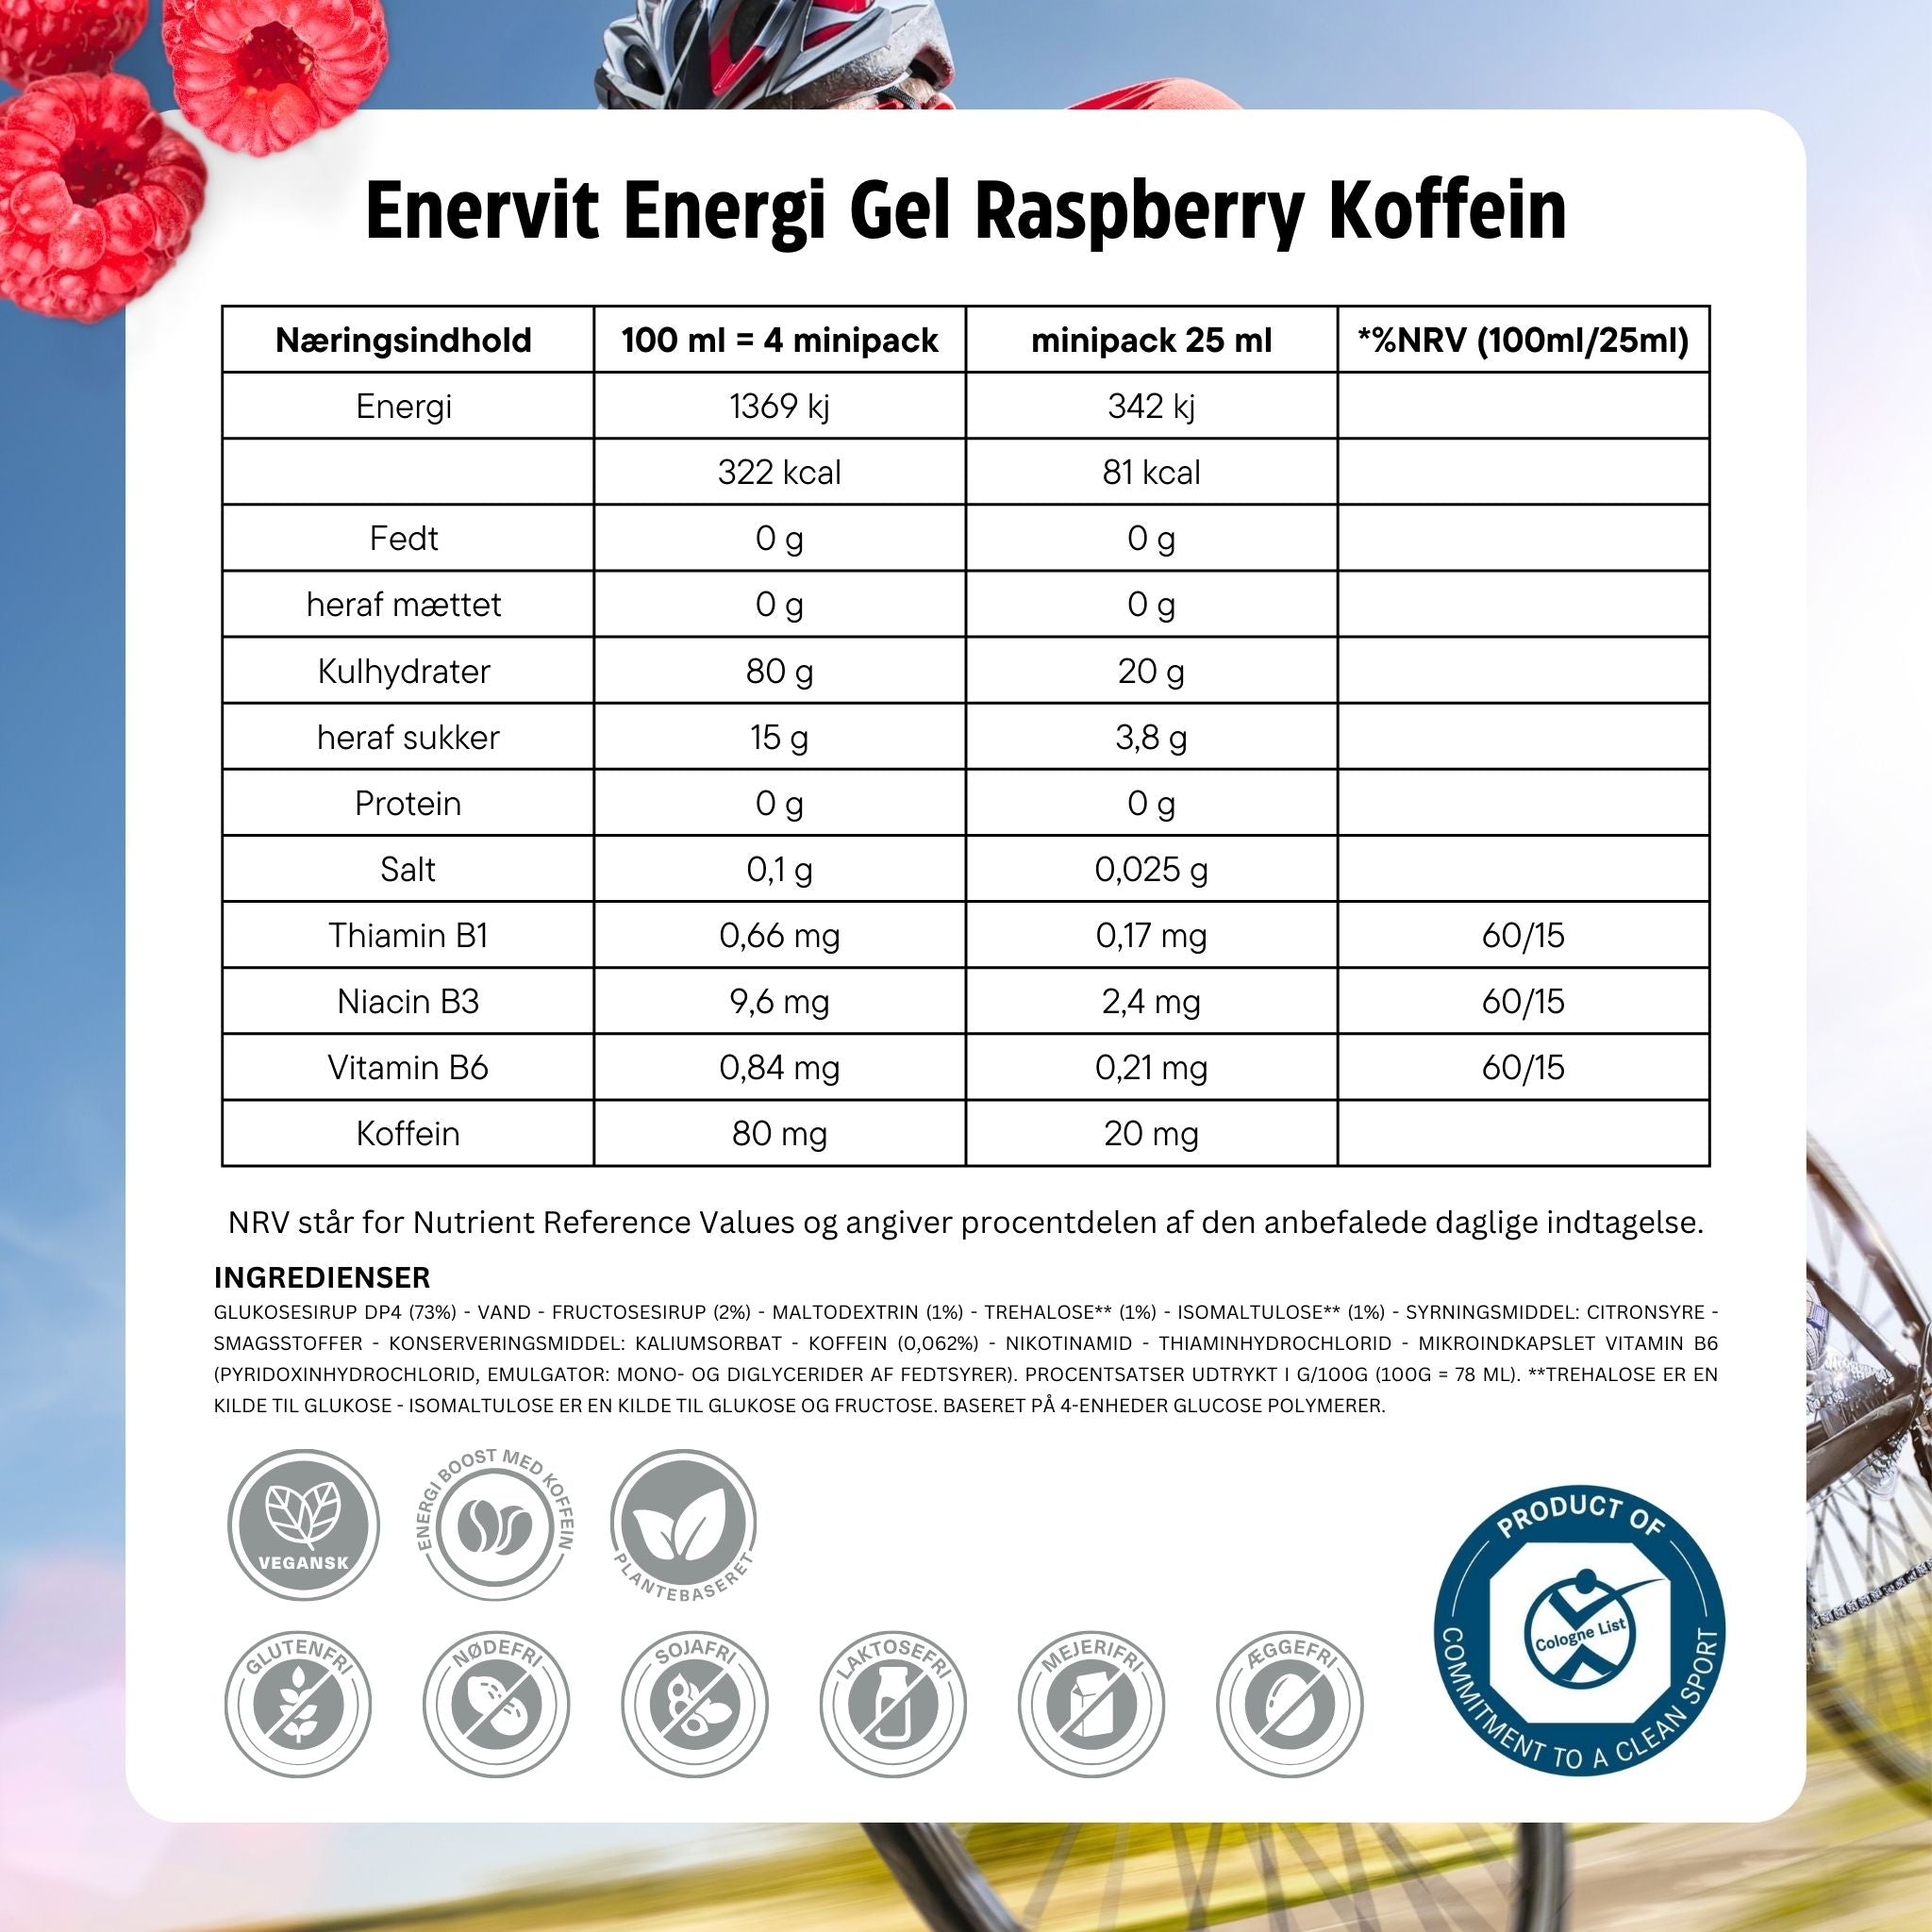 Enervit Energi gel Raspberry med Koffein (25ml)